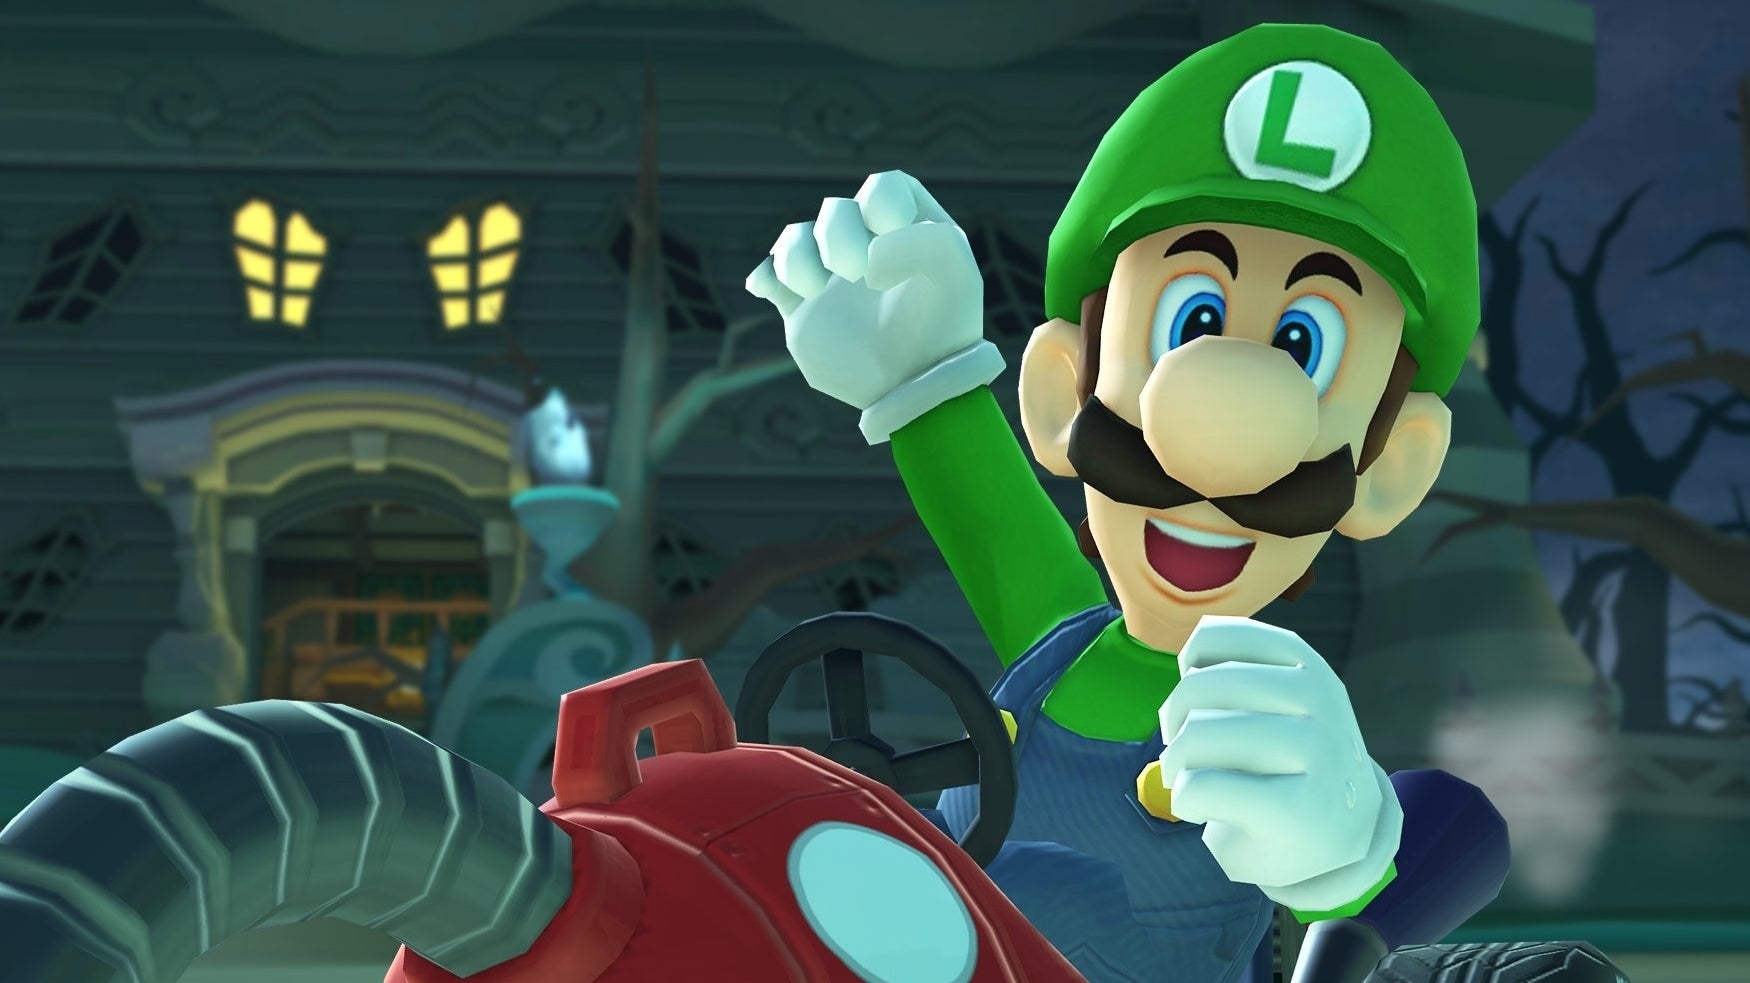 Image for Nintendo's mobile games reach $1bn in lifetime revenue